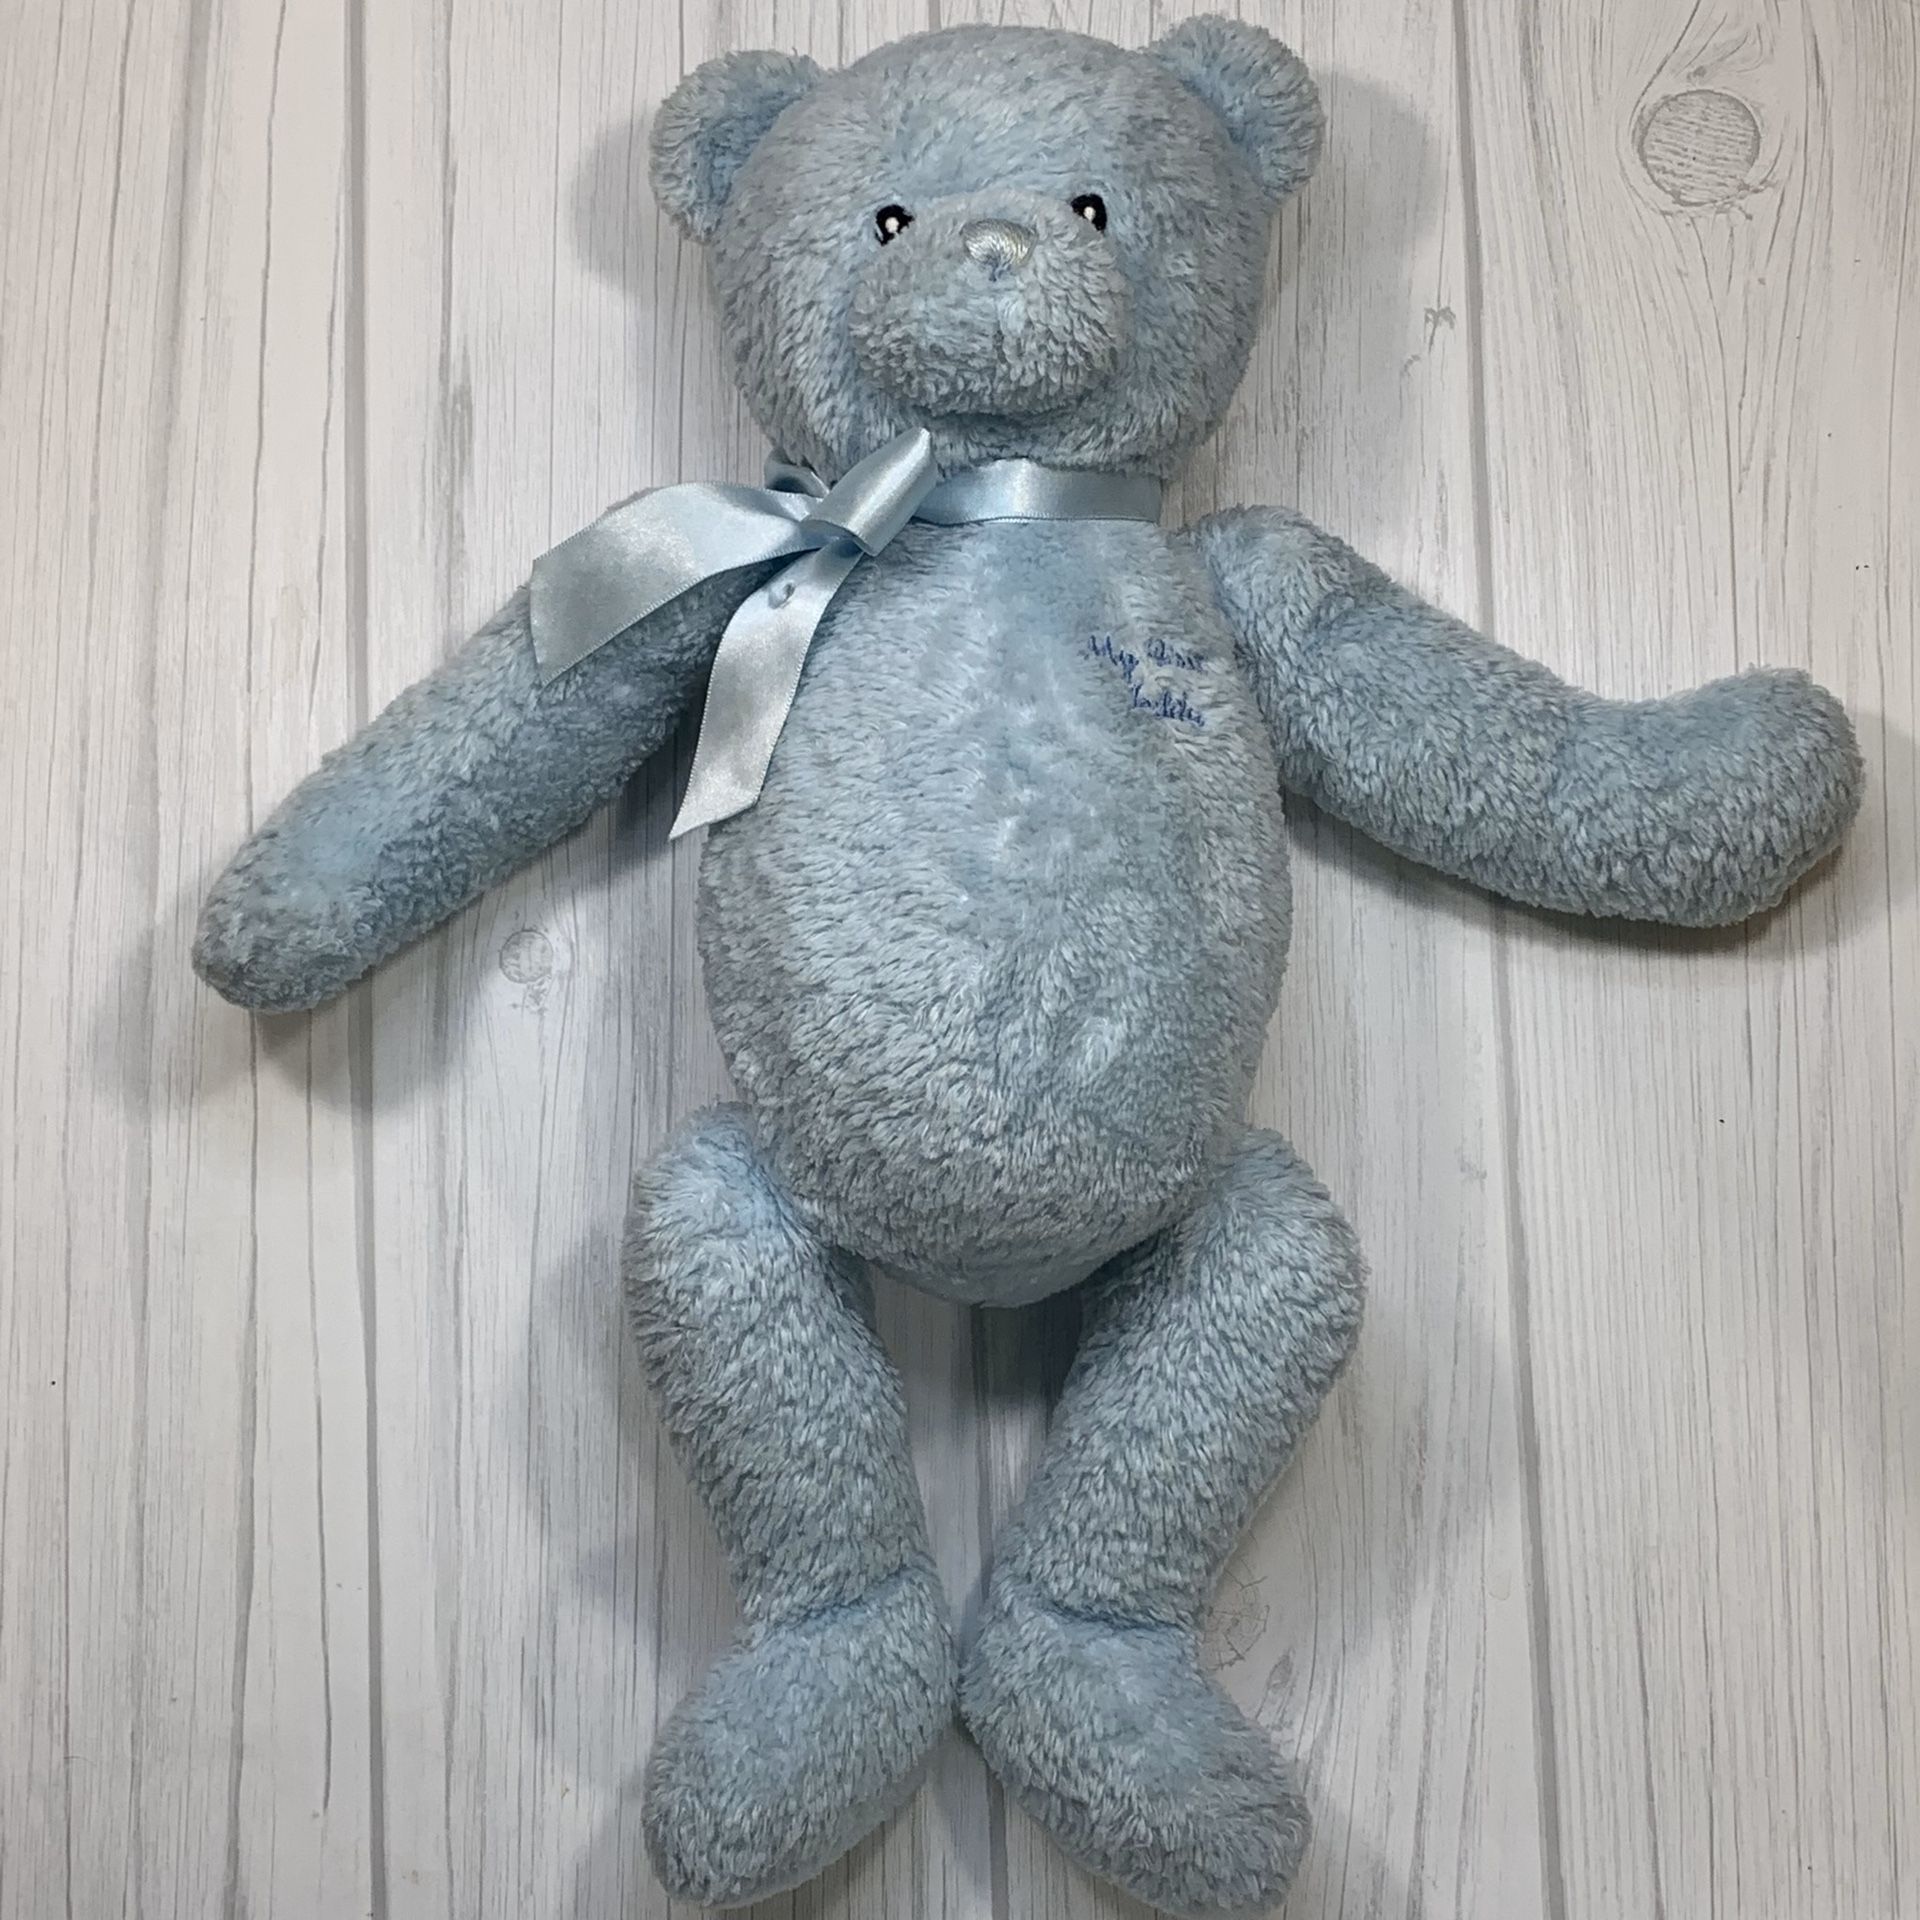 Baby Gund Plush Baby’s First Teddy Bear Stuffed Animal Lovie